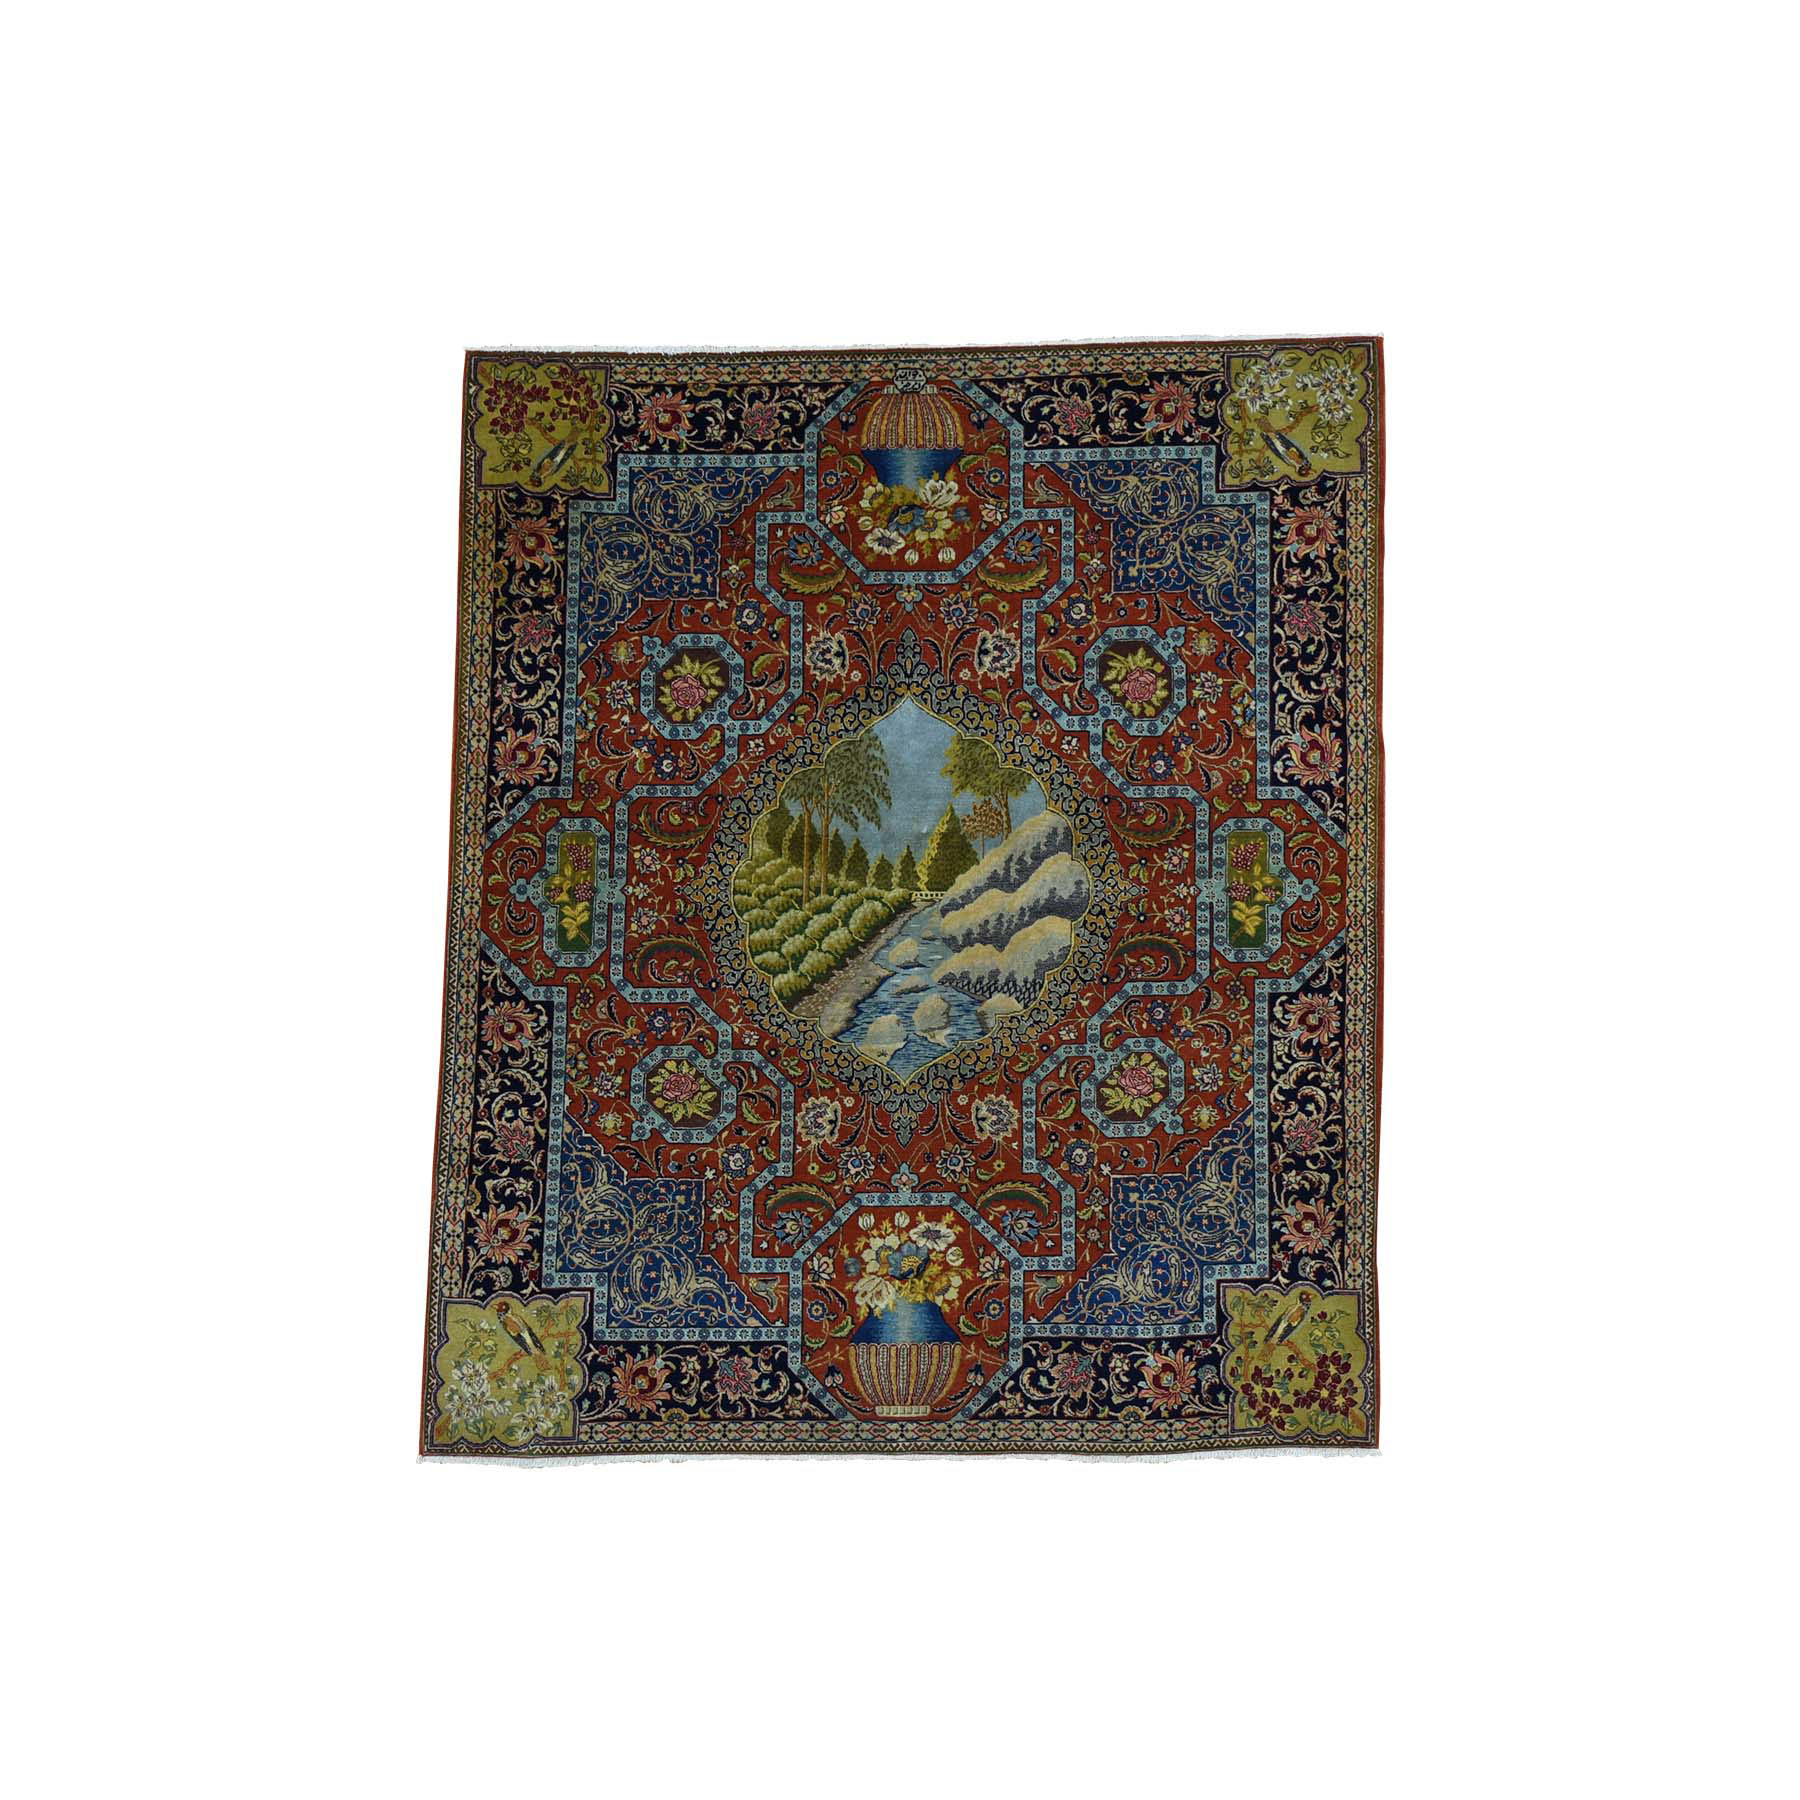 4'7"x5'4" Antique Persian Tabriz Pictorial Mint Cond Oriental Rug 